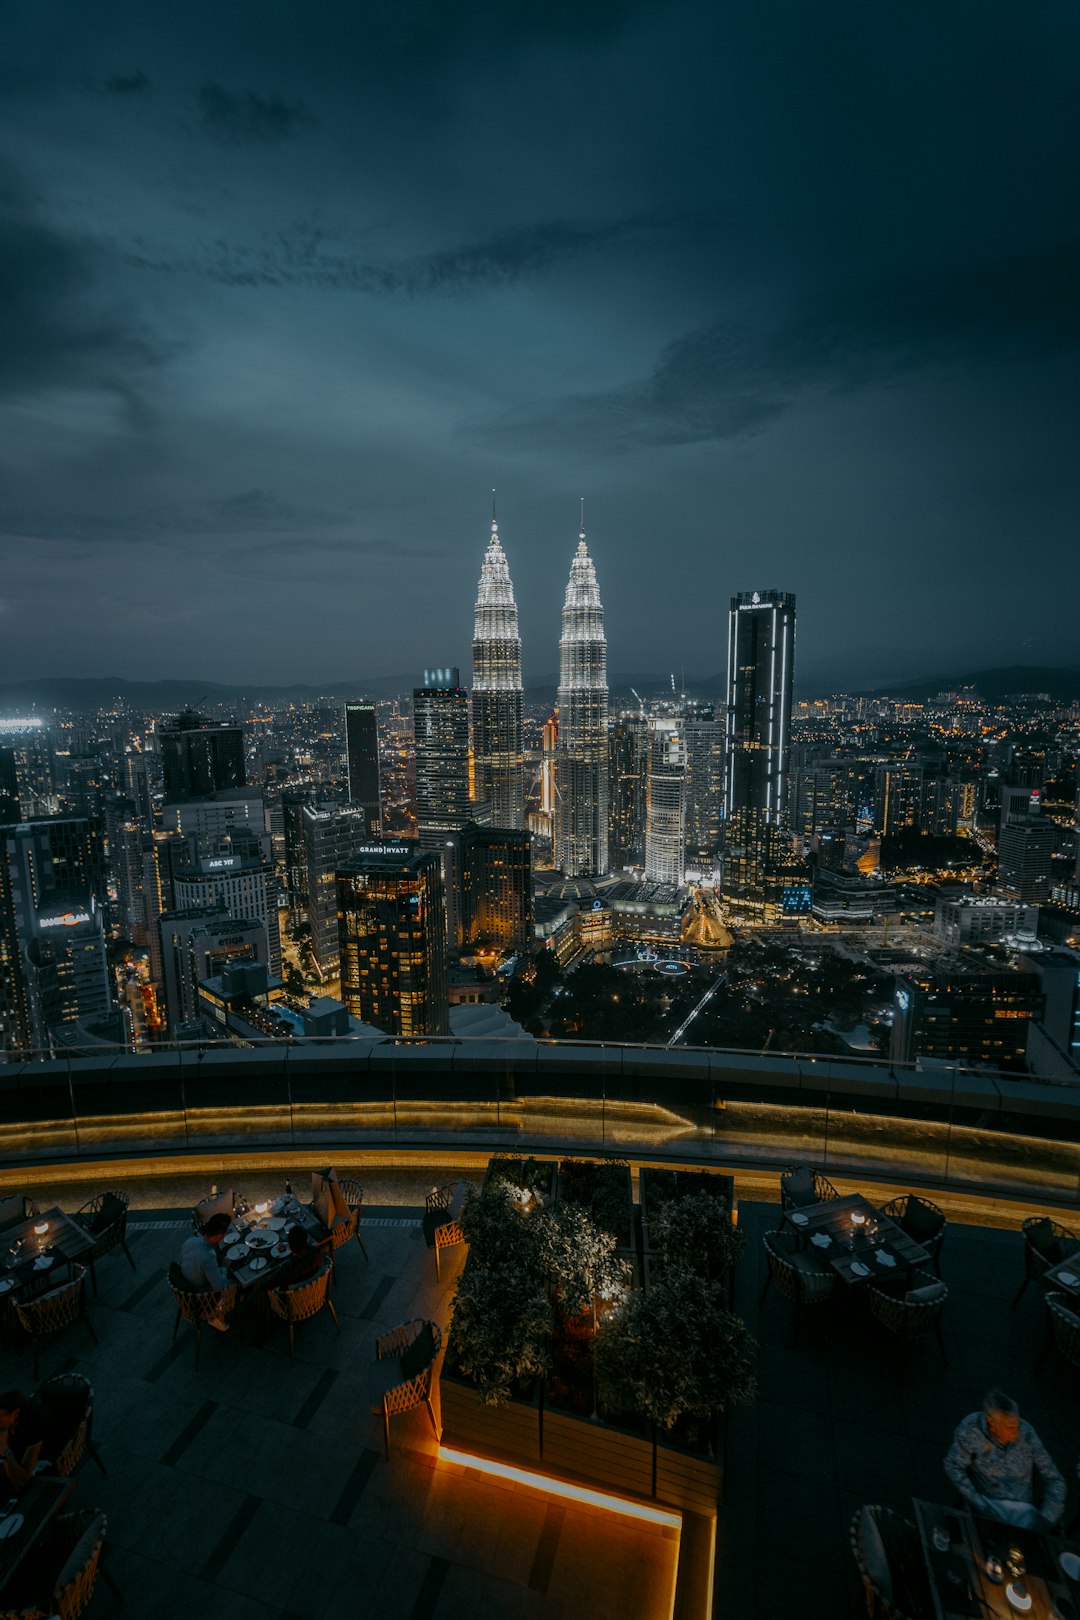 travelers stories about Landmark in Kuala Lumpur, Malaysia